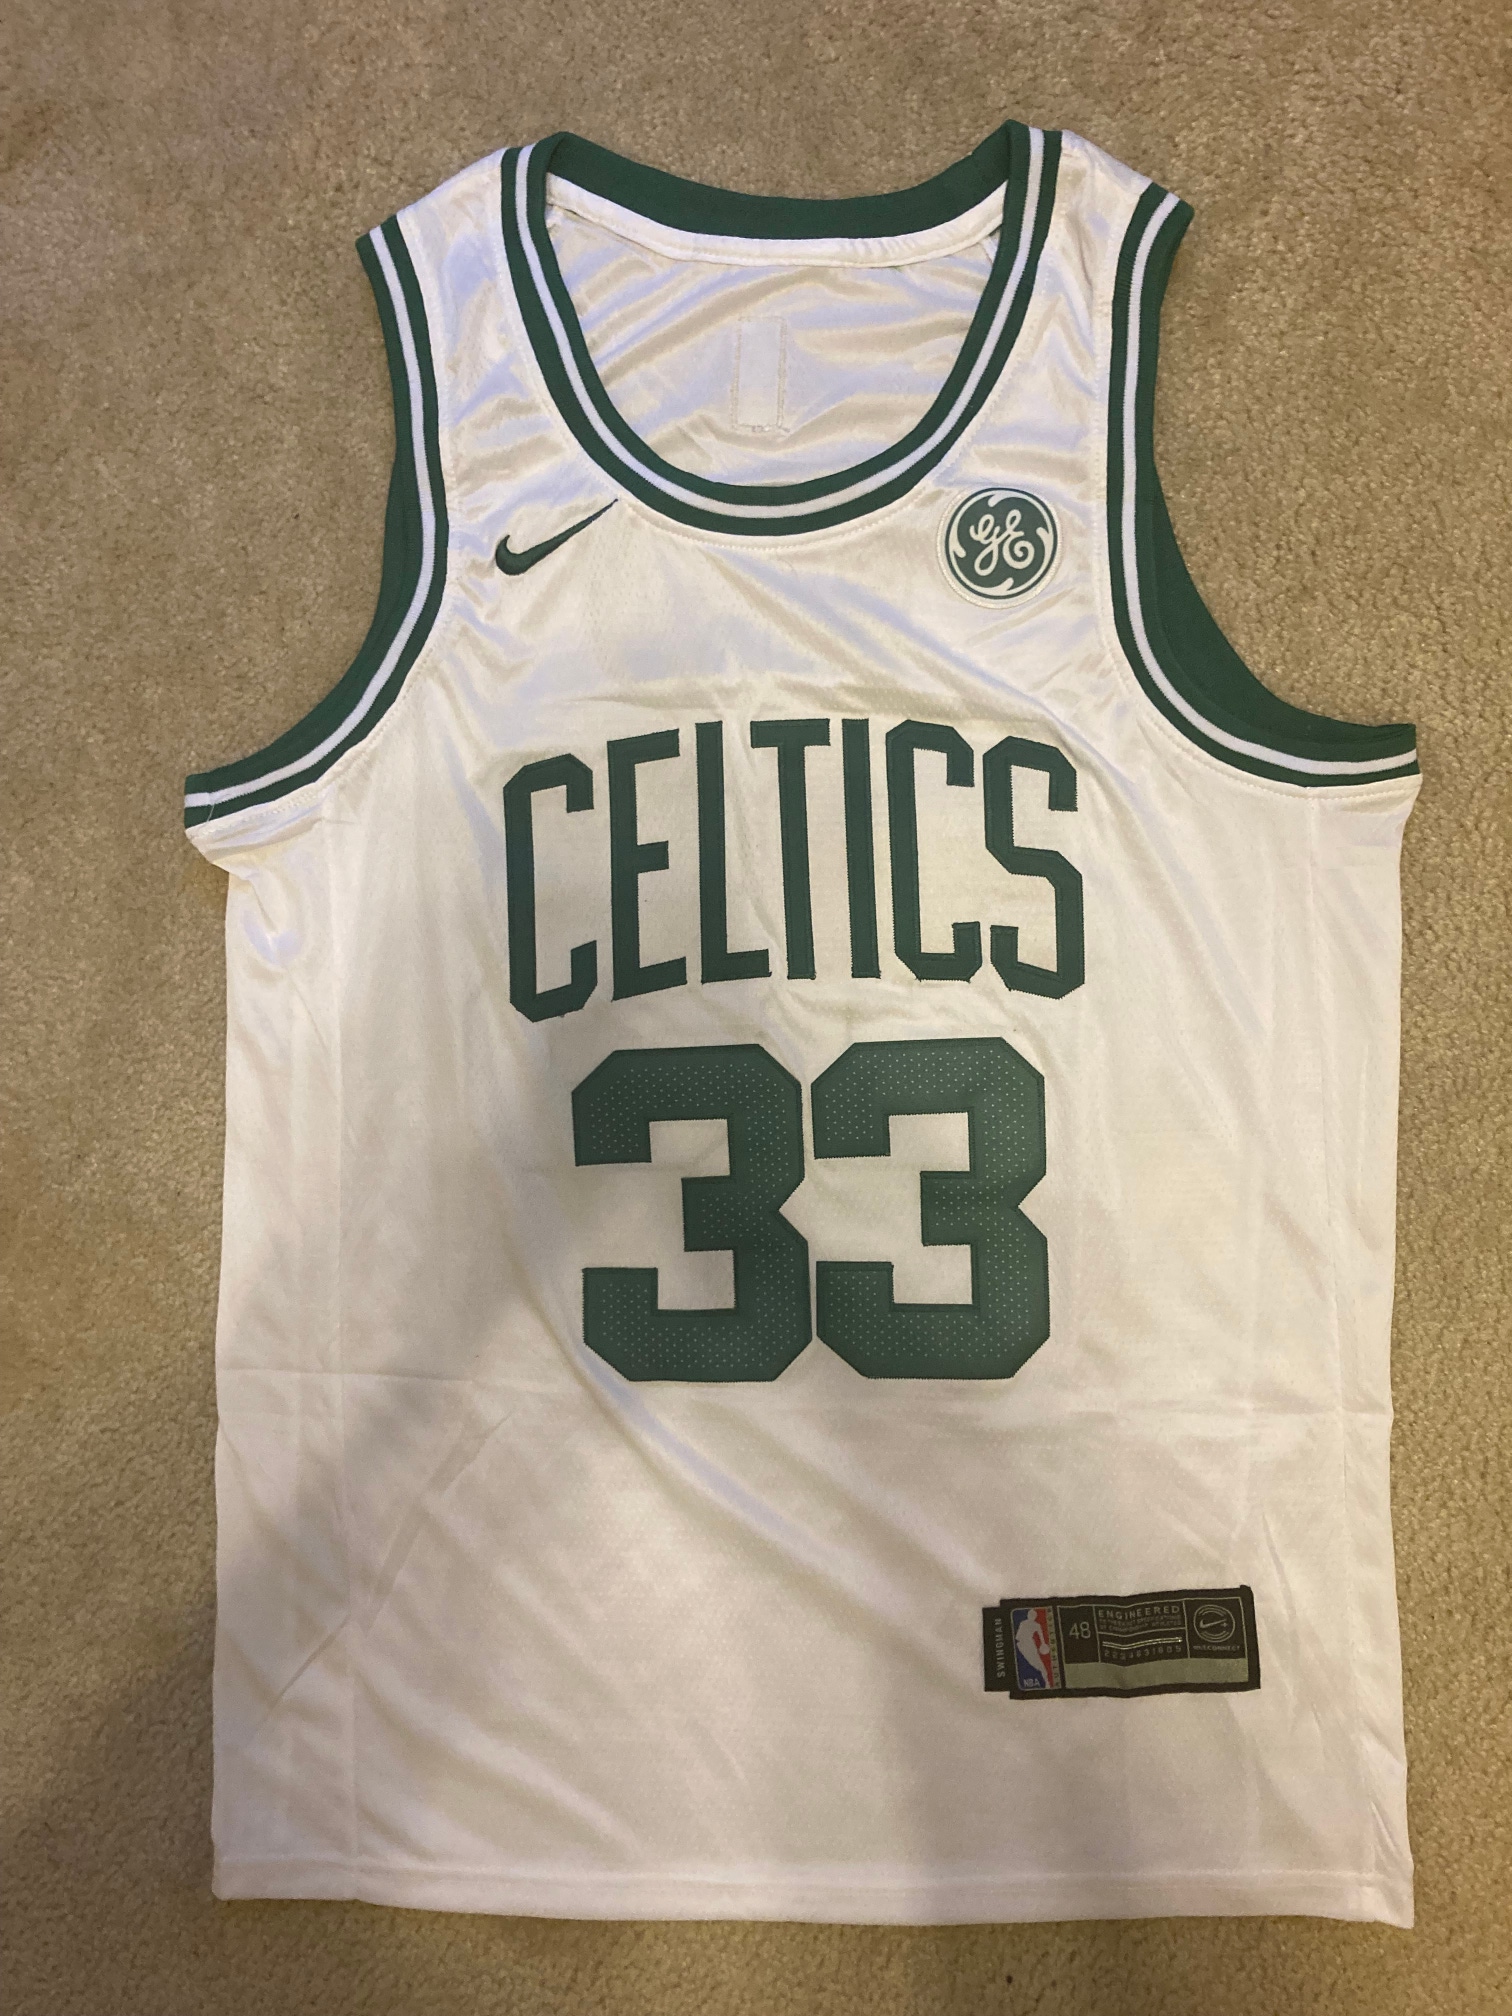 NEW - Mens Stitched Nike NBA Jersey - Larry Bird - Celtics - S-XXL - White